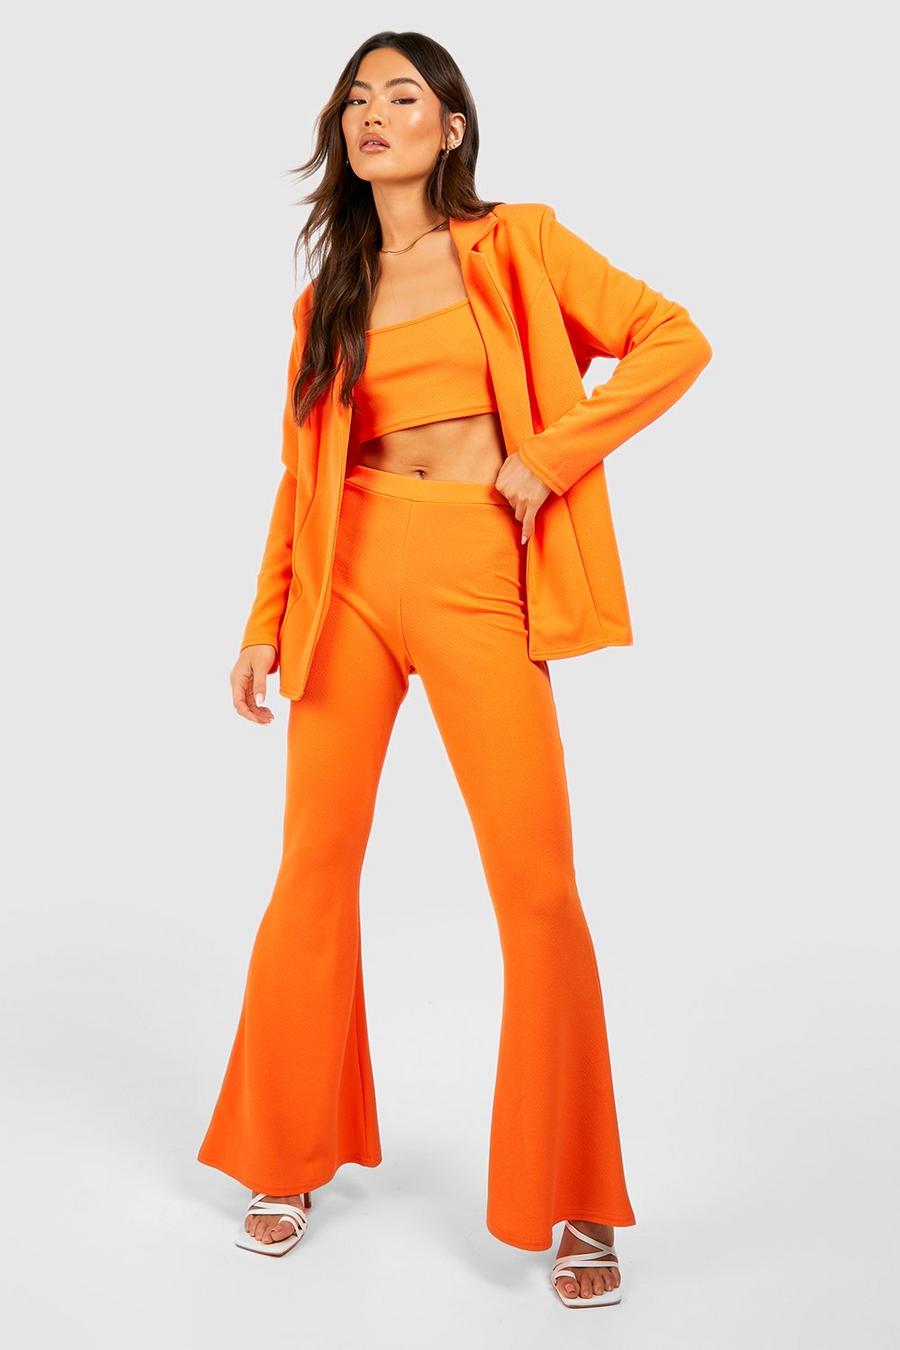 Orange Jersey Knit Crepe Fit & Flare Dress Pants